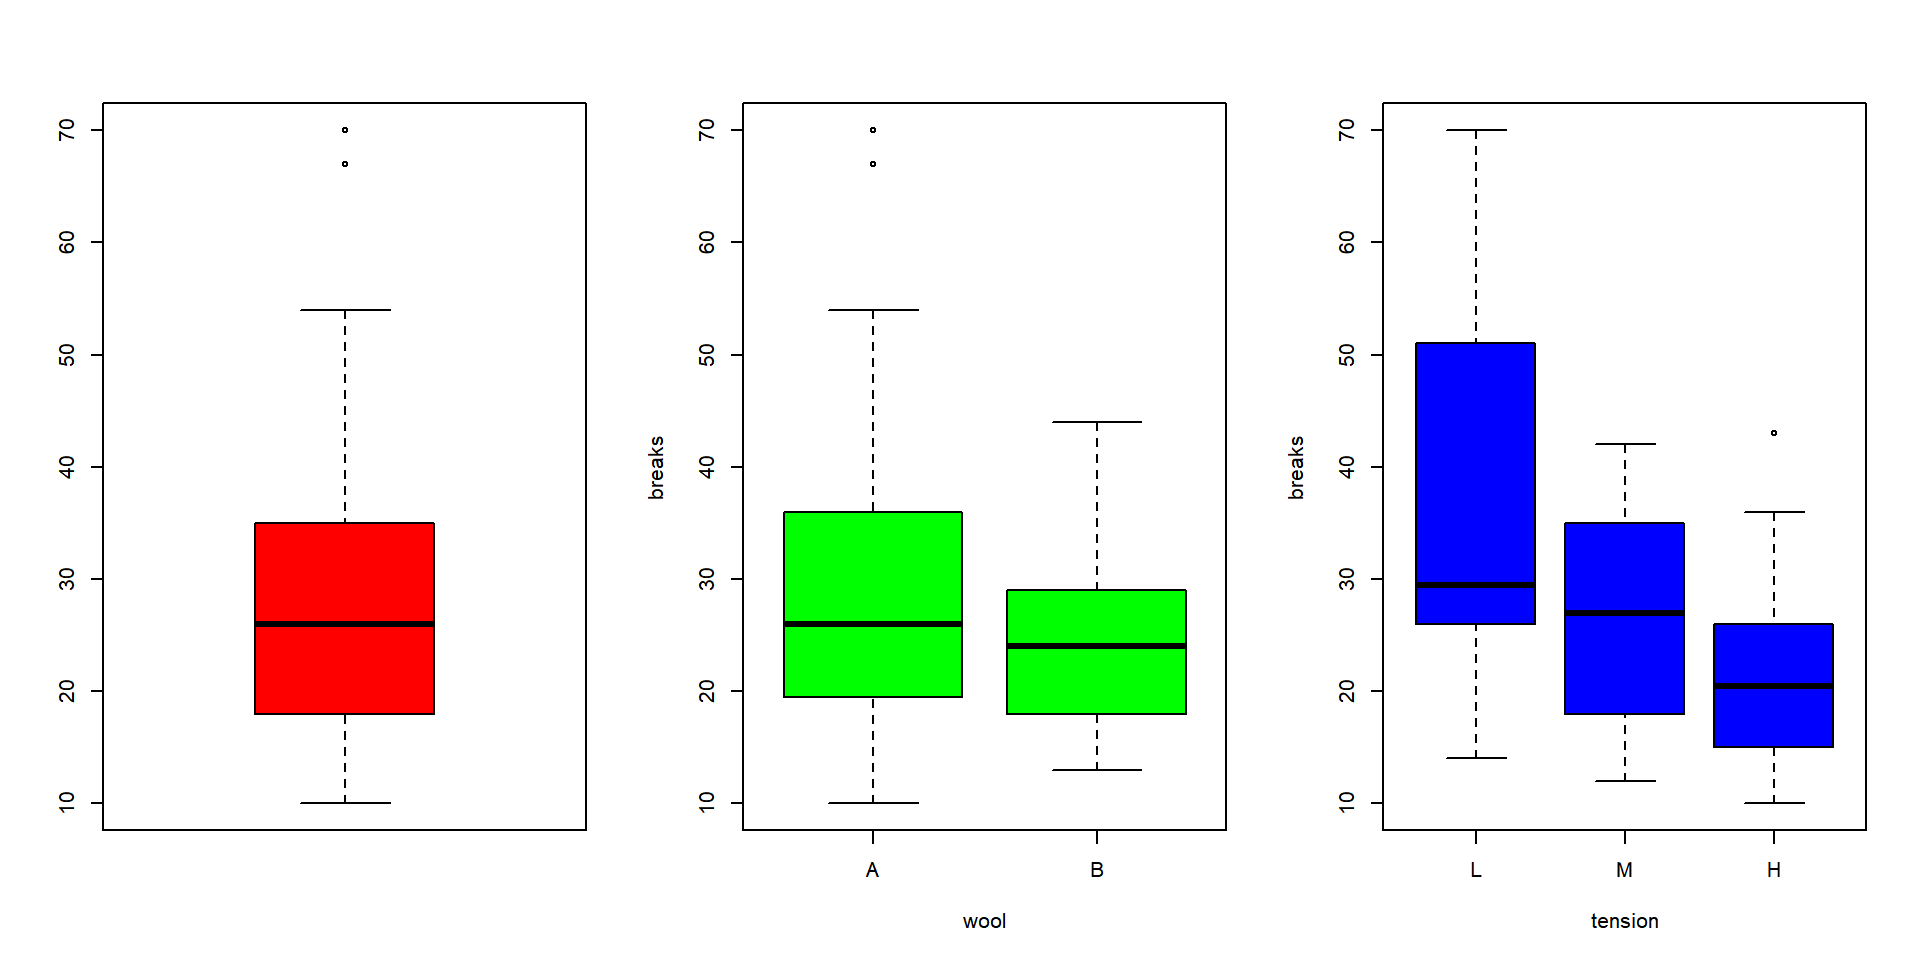 Multiple Box Plots in One Plot in R